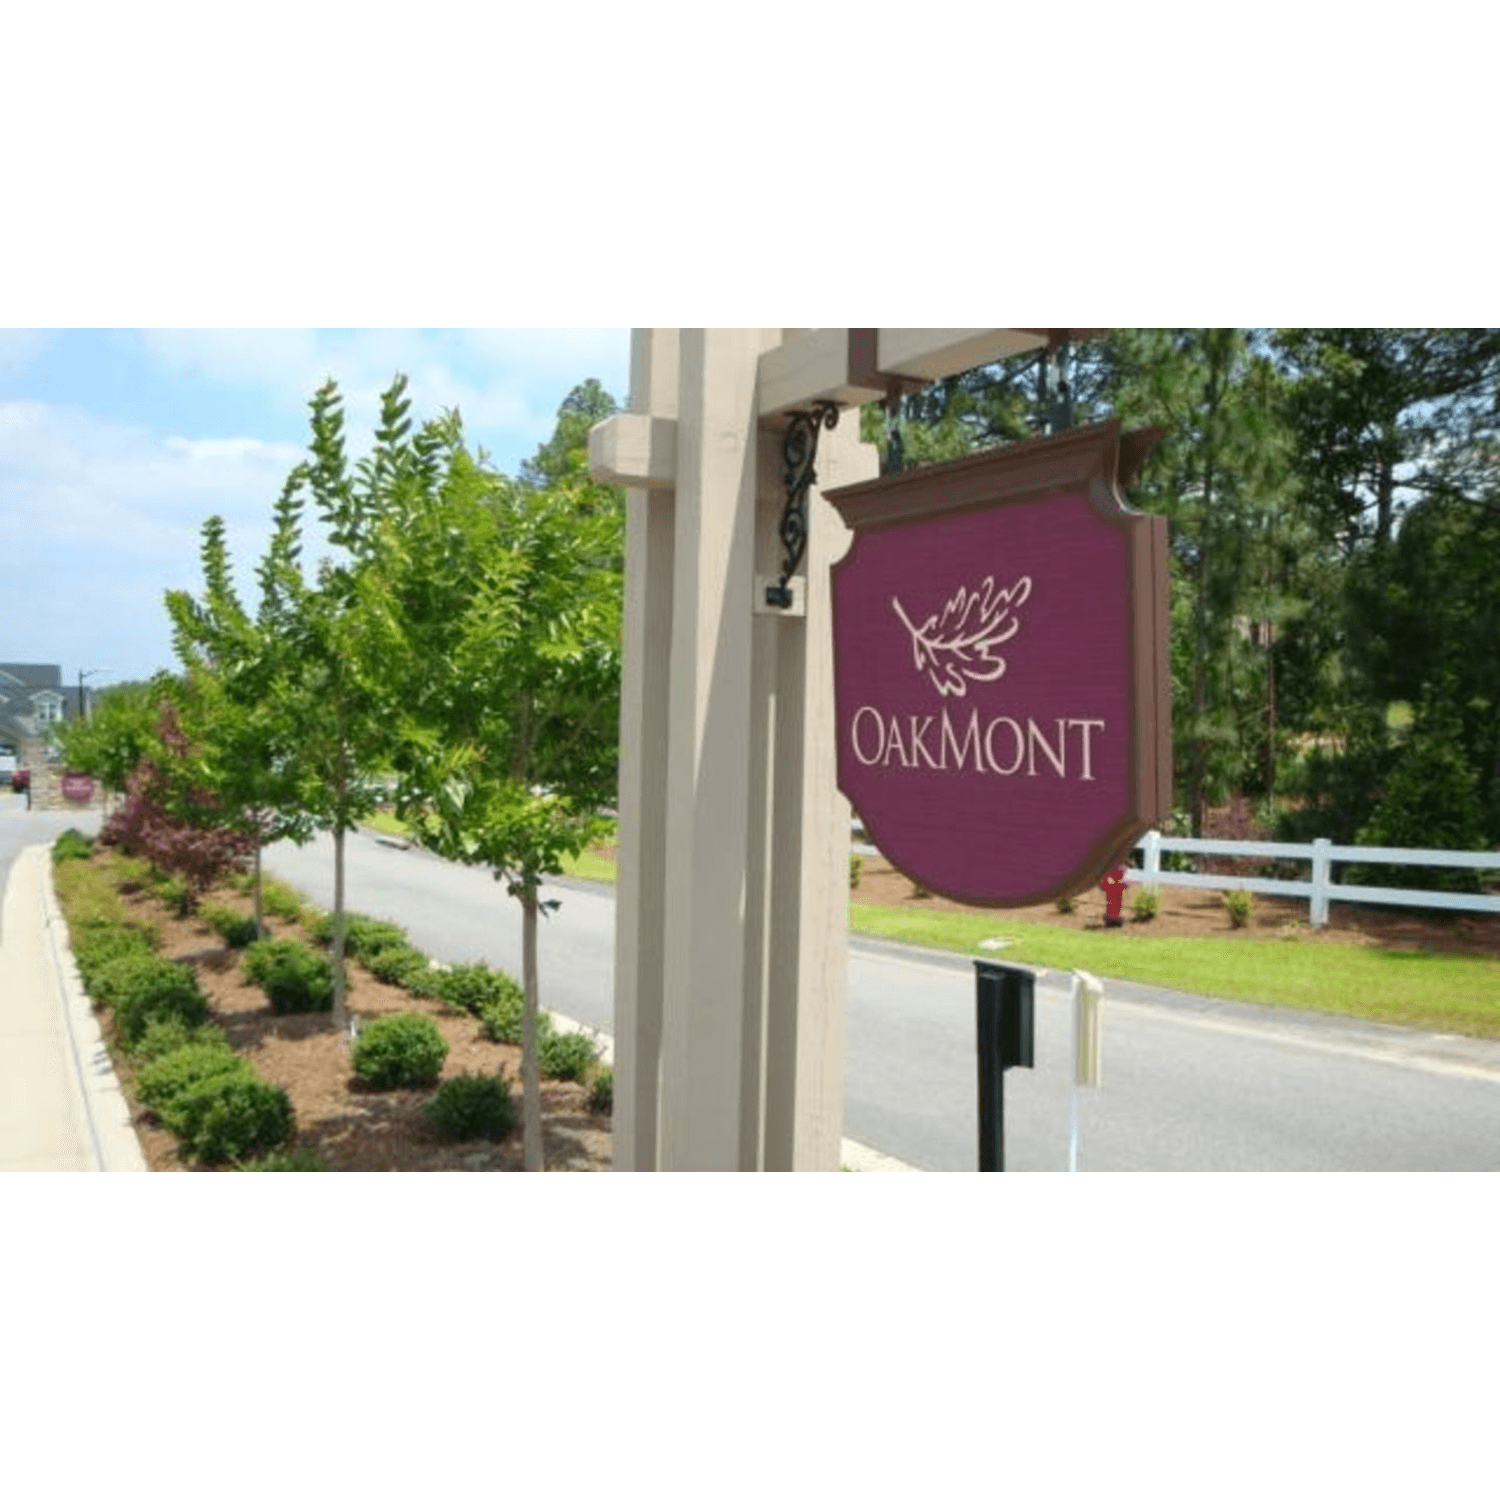 Oakmont building at 632 Executive Rd, Lillington, NC 27546